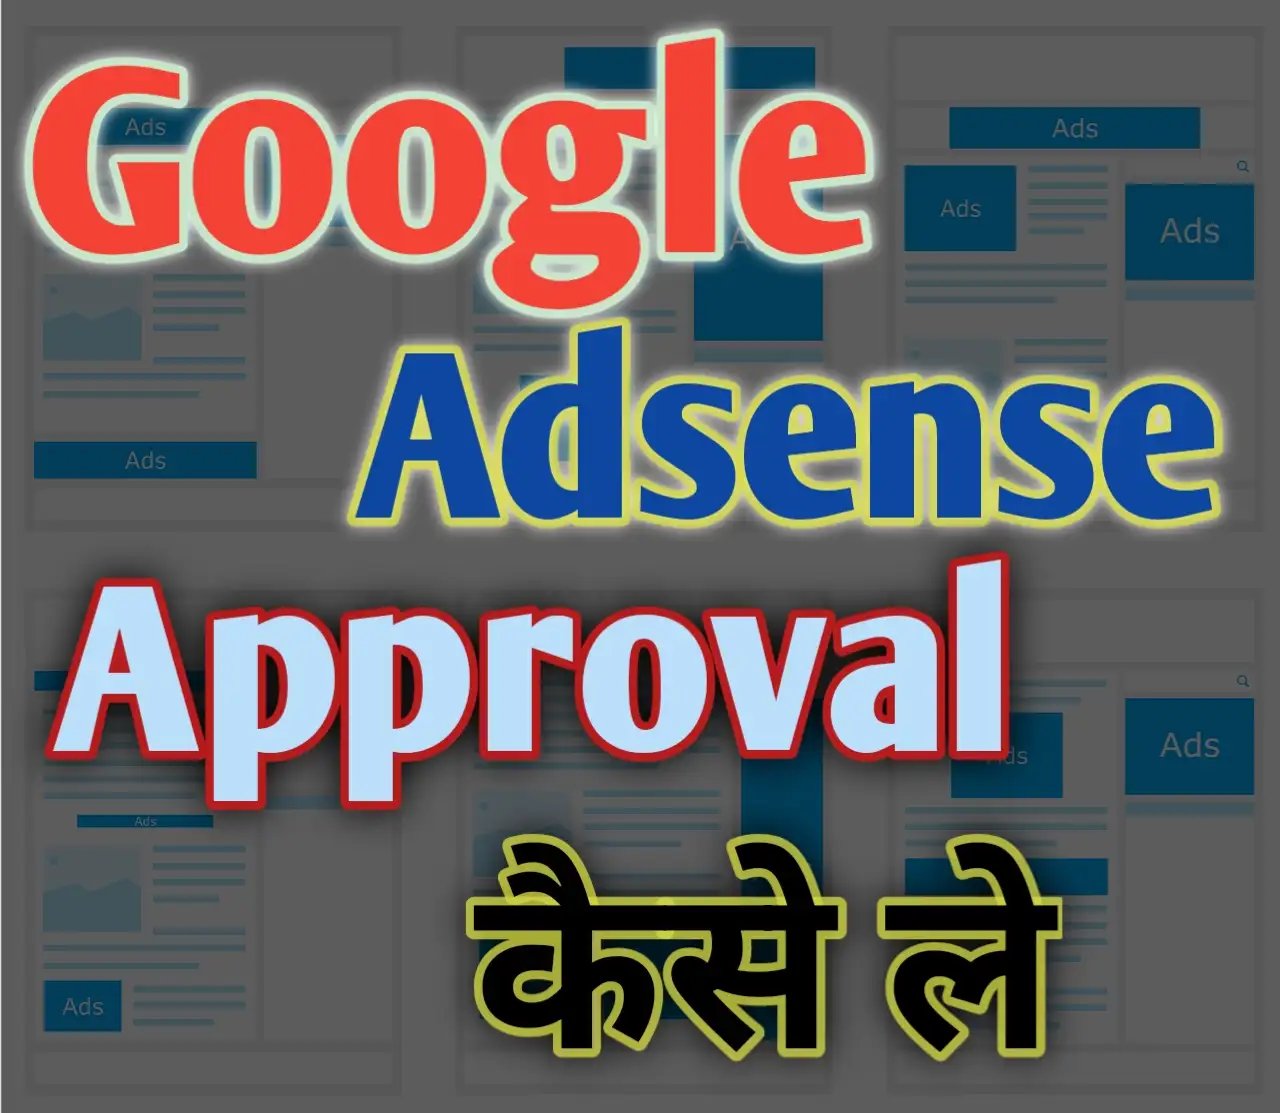 Google Adsense approval